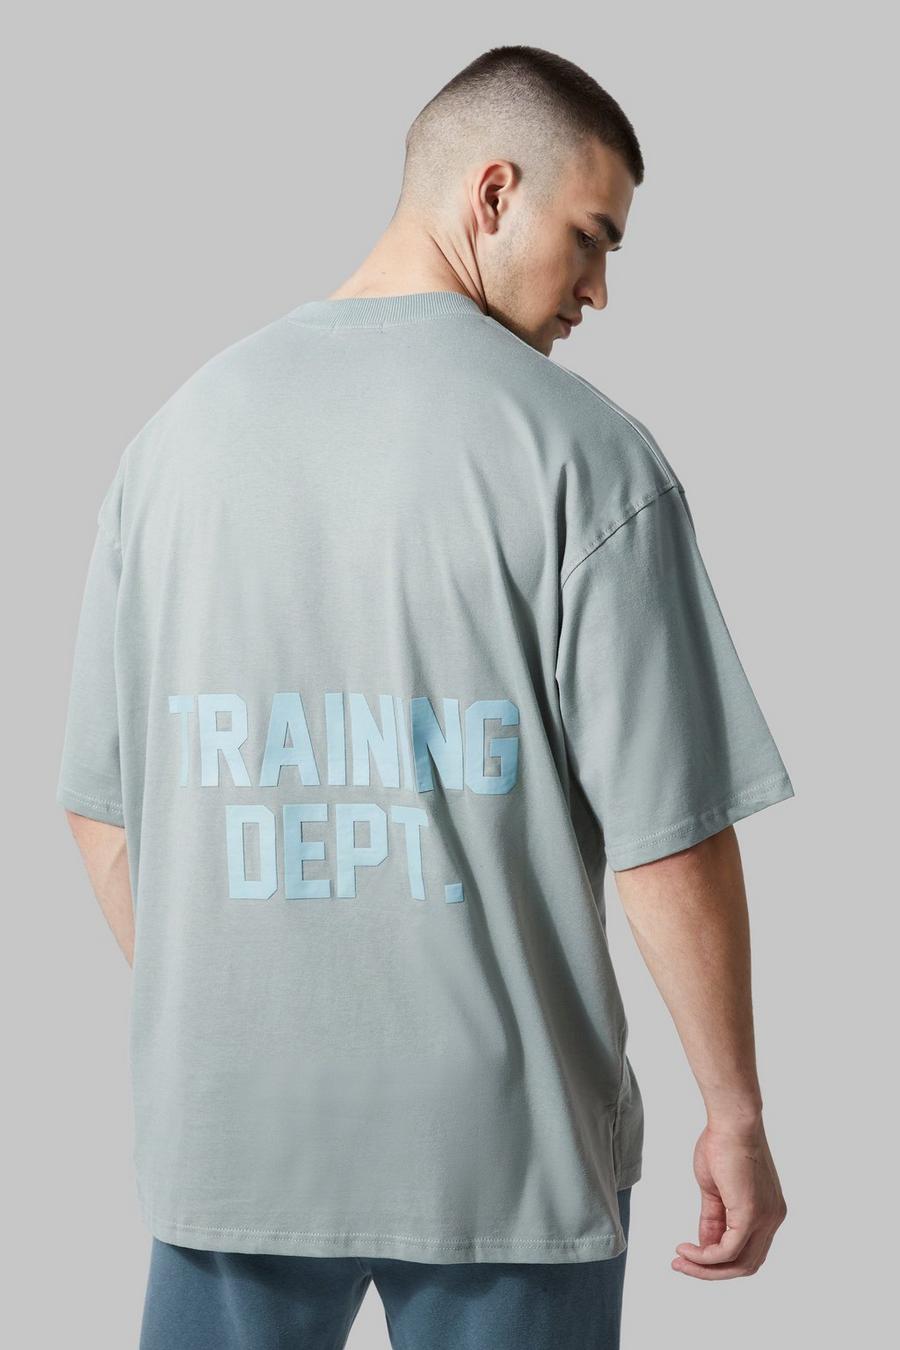 Sage green Tall Active Training Dept Oversized T-shirt